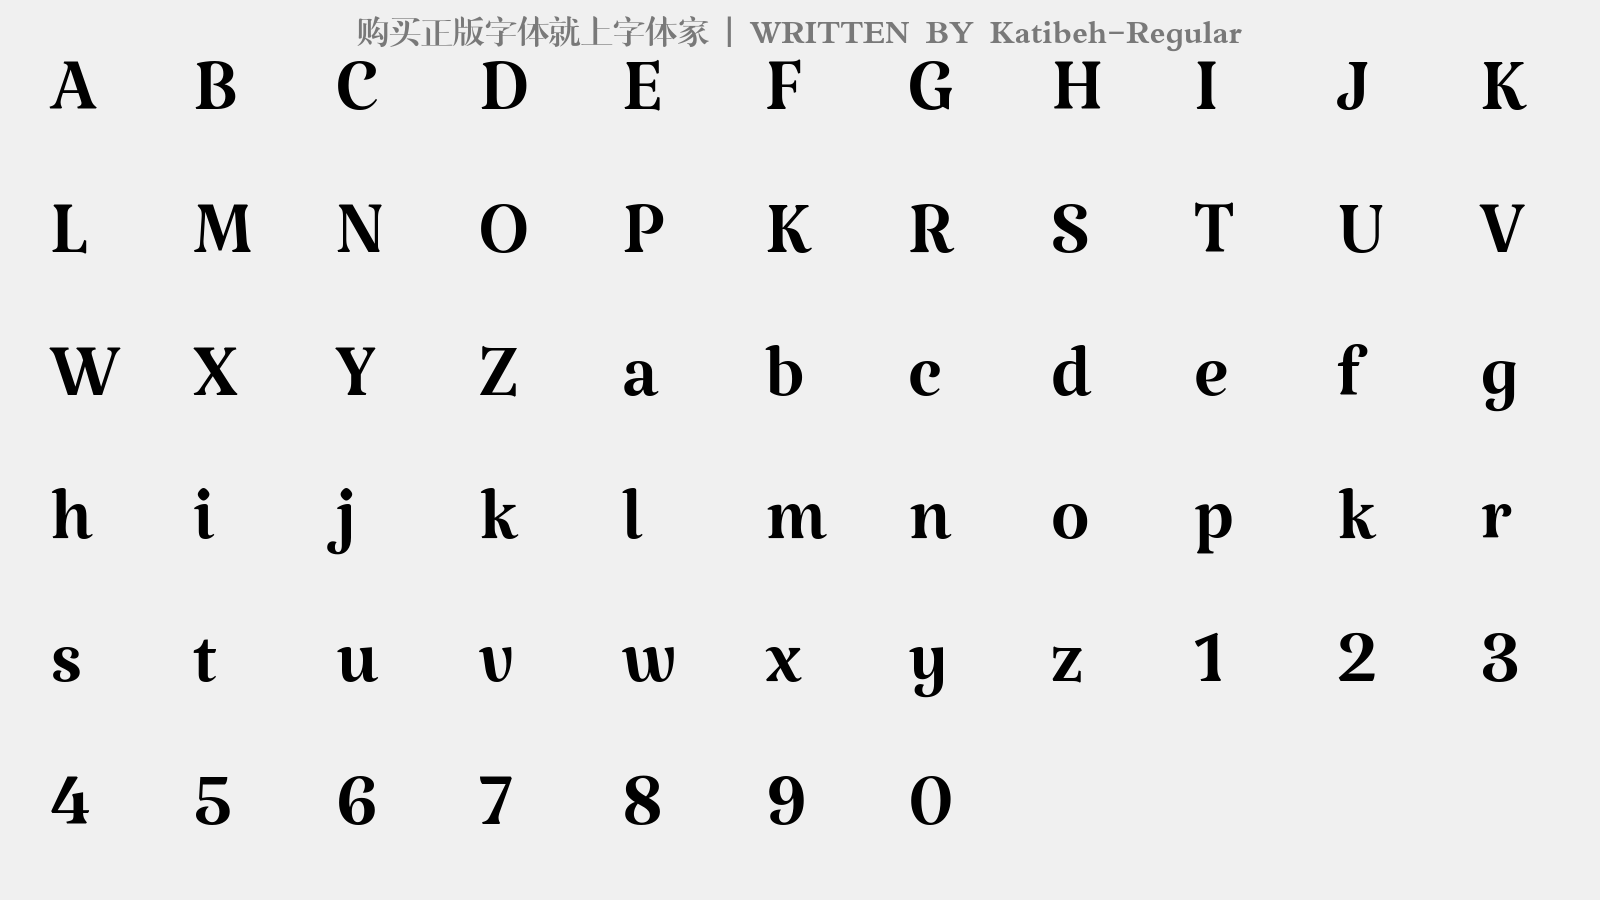 Katibeh-Regular - 大写字母/小写字母/数字